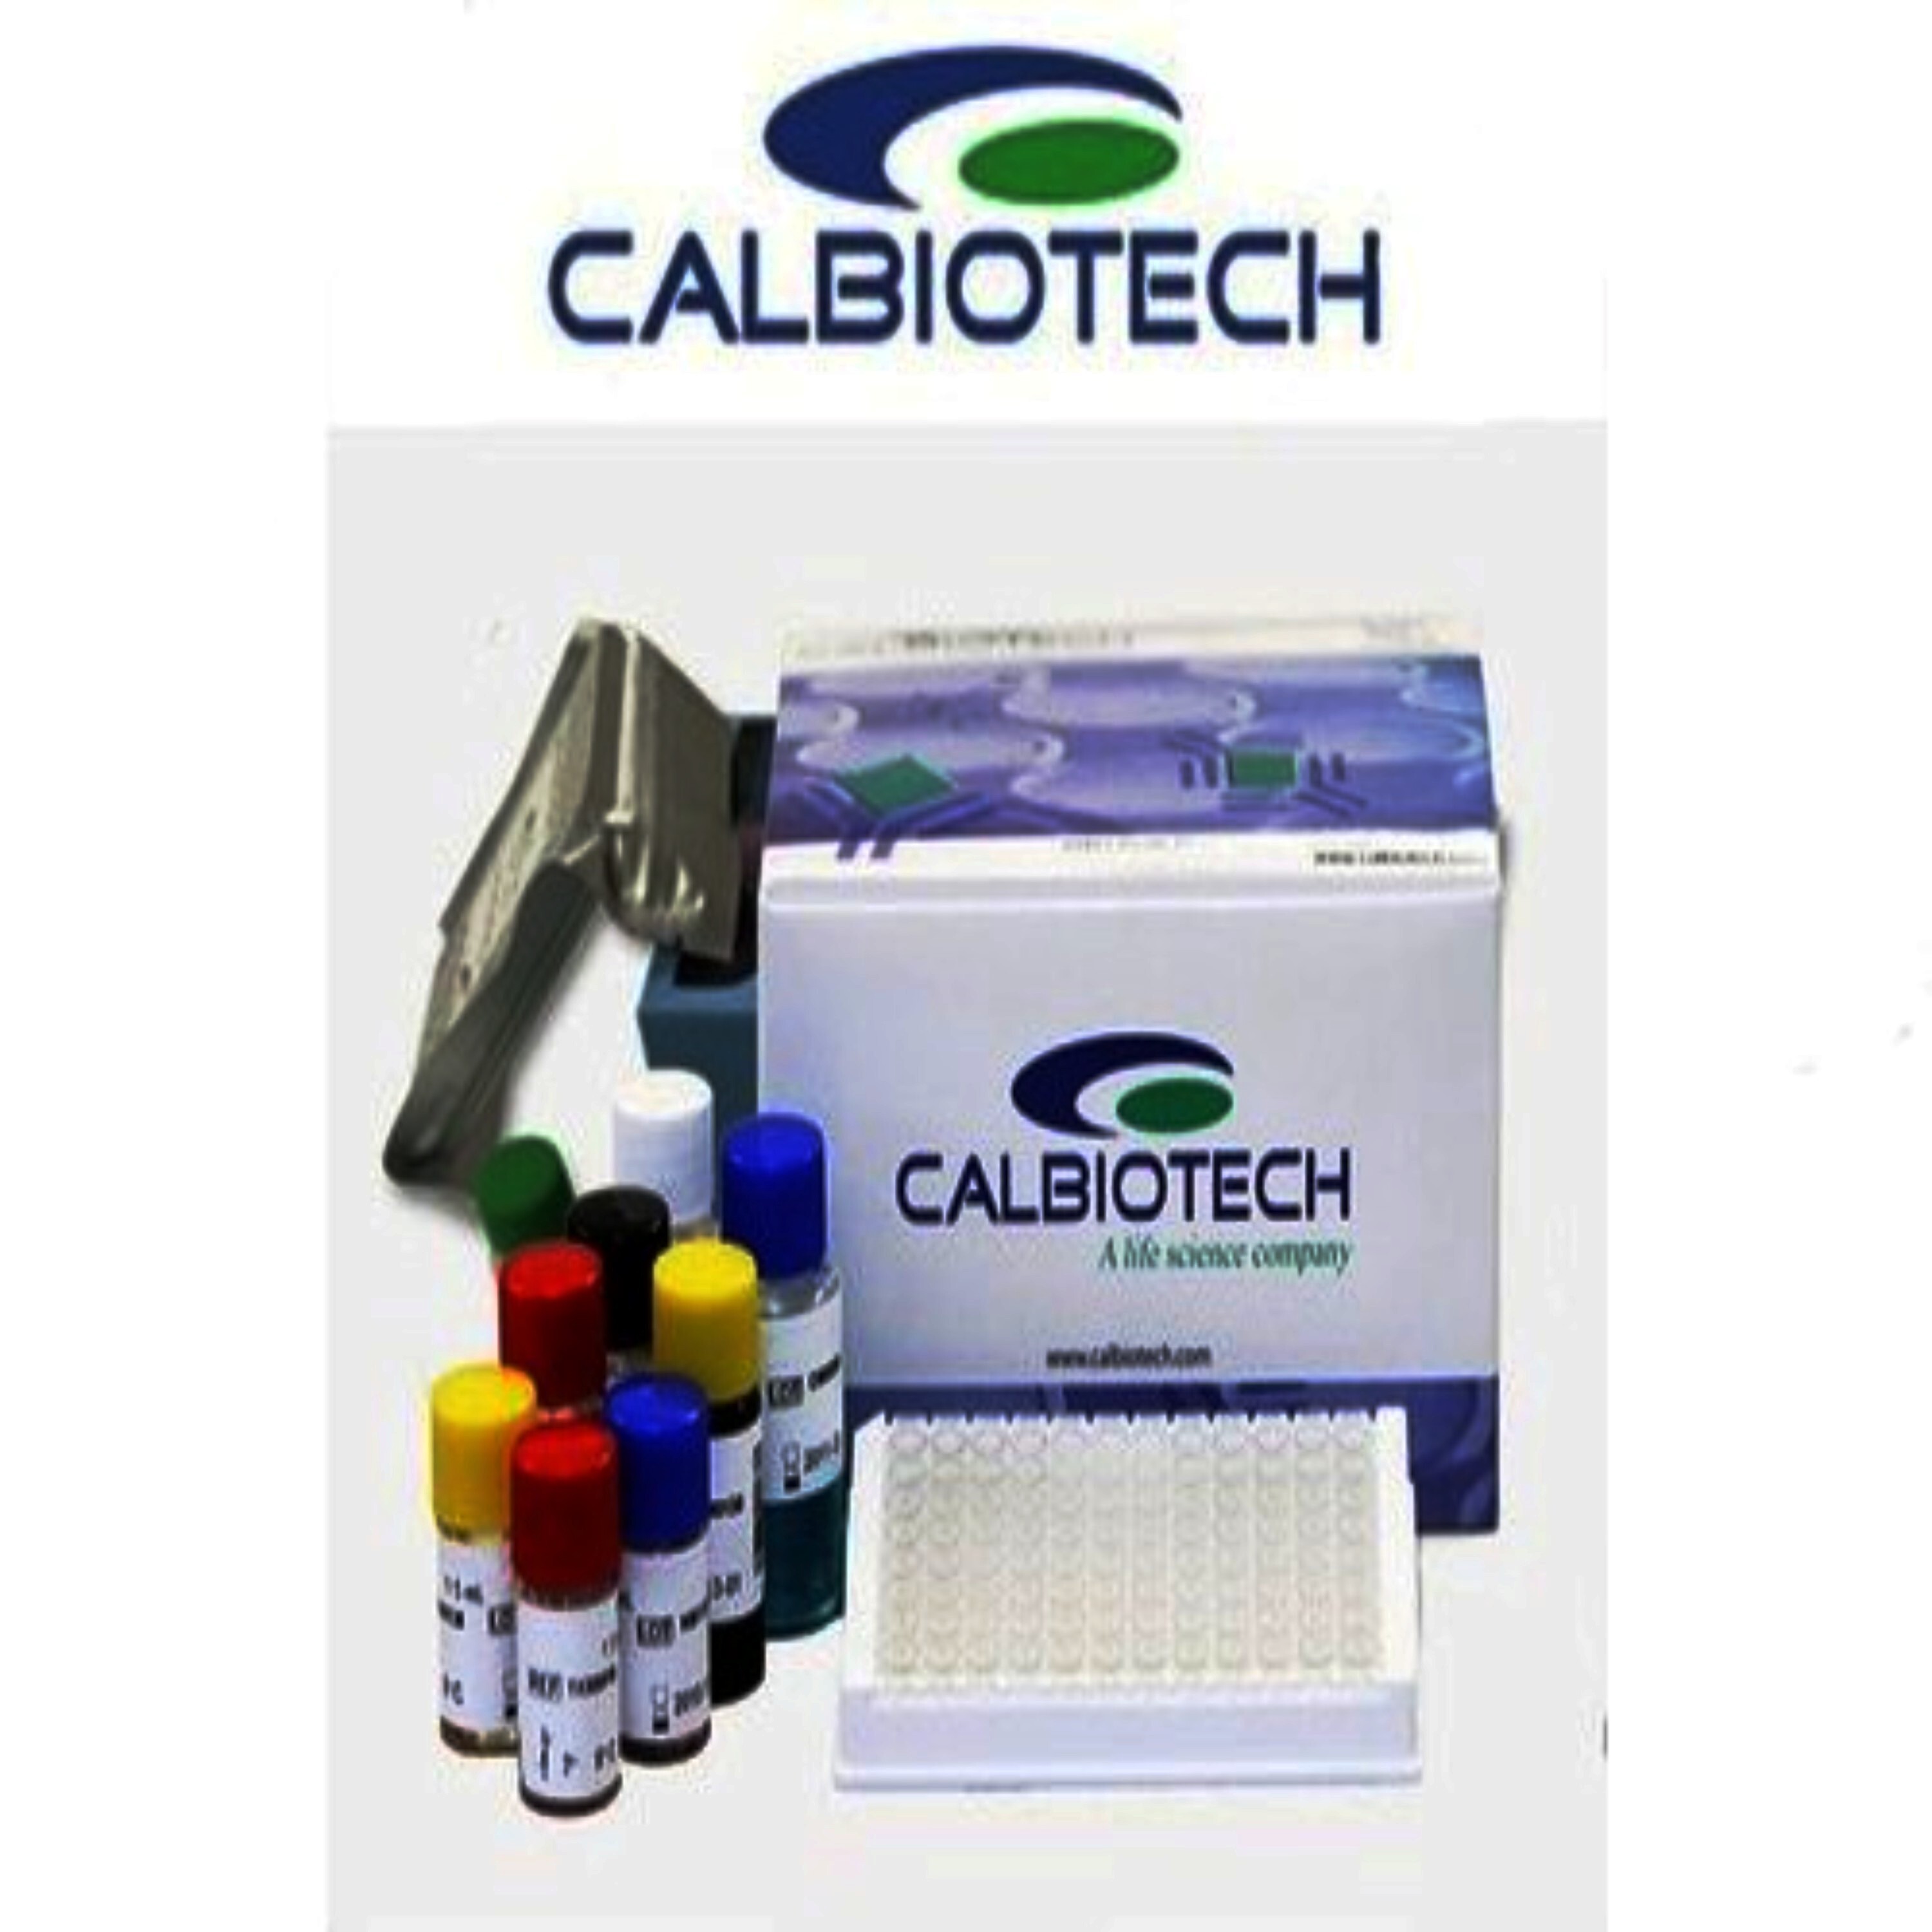 Calbiotech Brucella IgM Elisa Kit